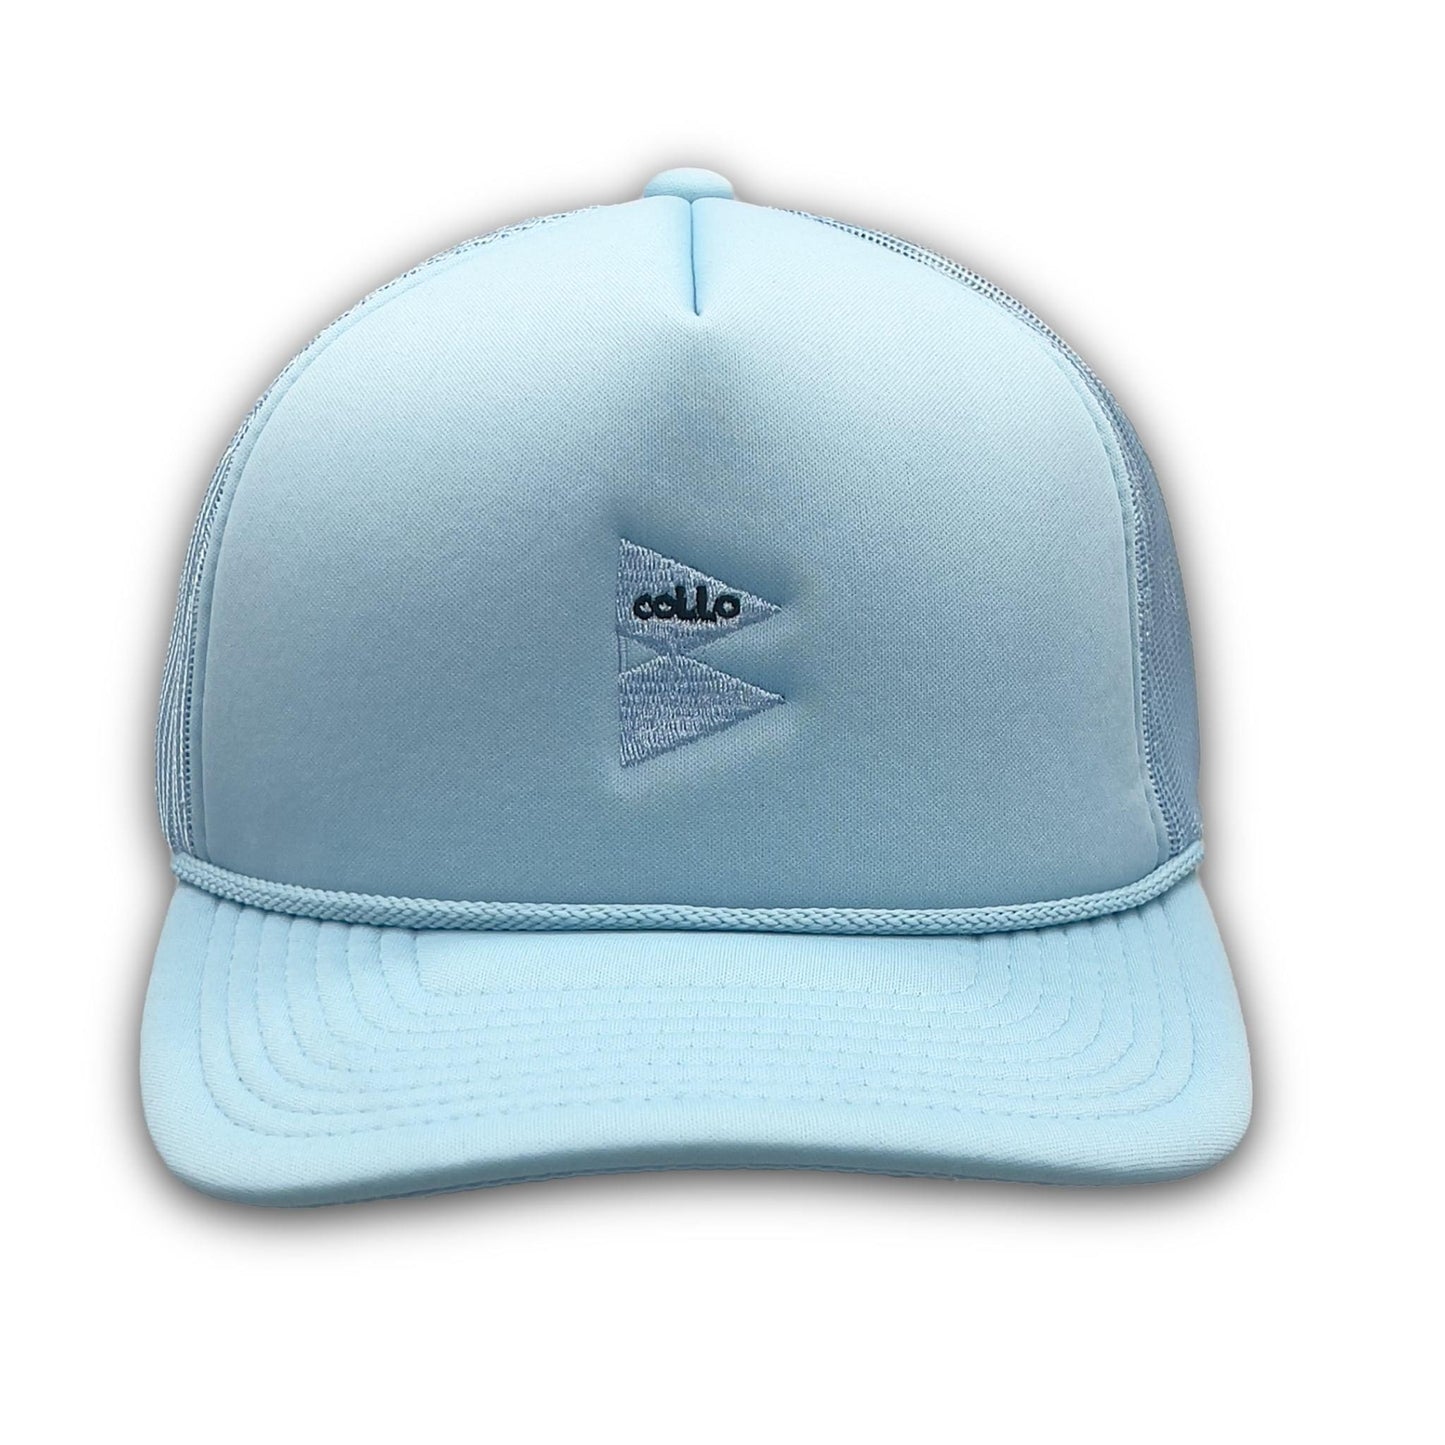 coLLo AppareL Hats ADJ / SKY BLUE MASON